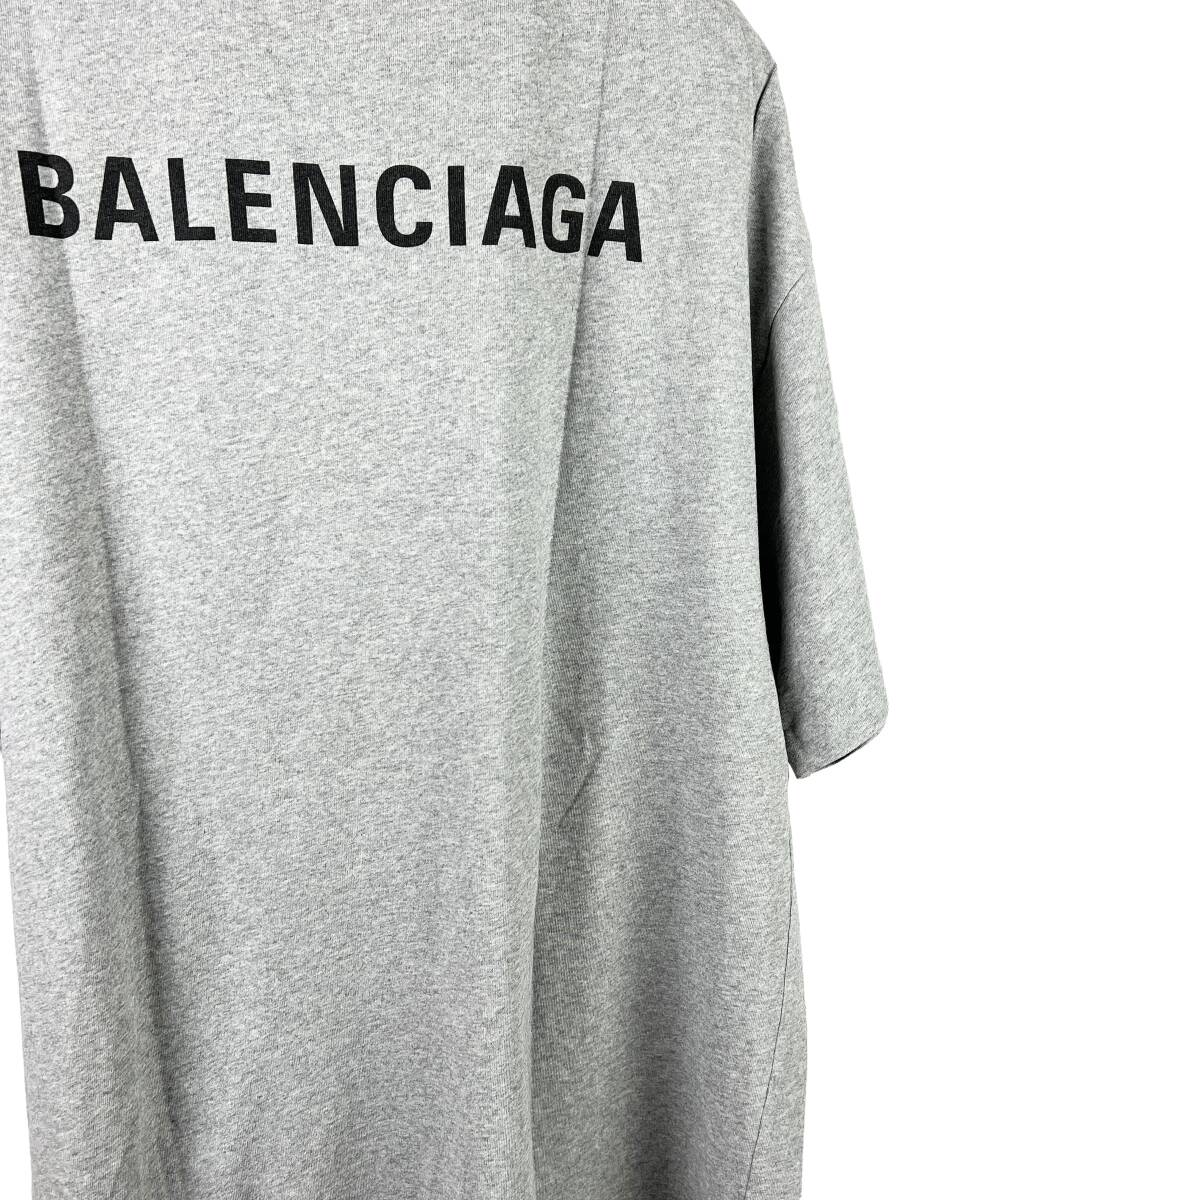 Balenciaga(バレンシアガ) Front Back LOGO Shortsleeve T Shirt (grey)